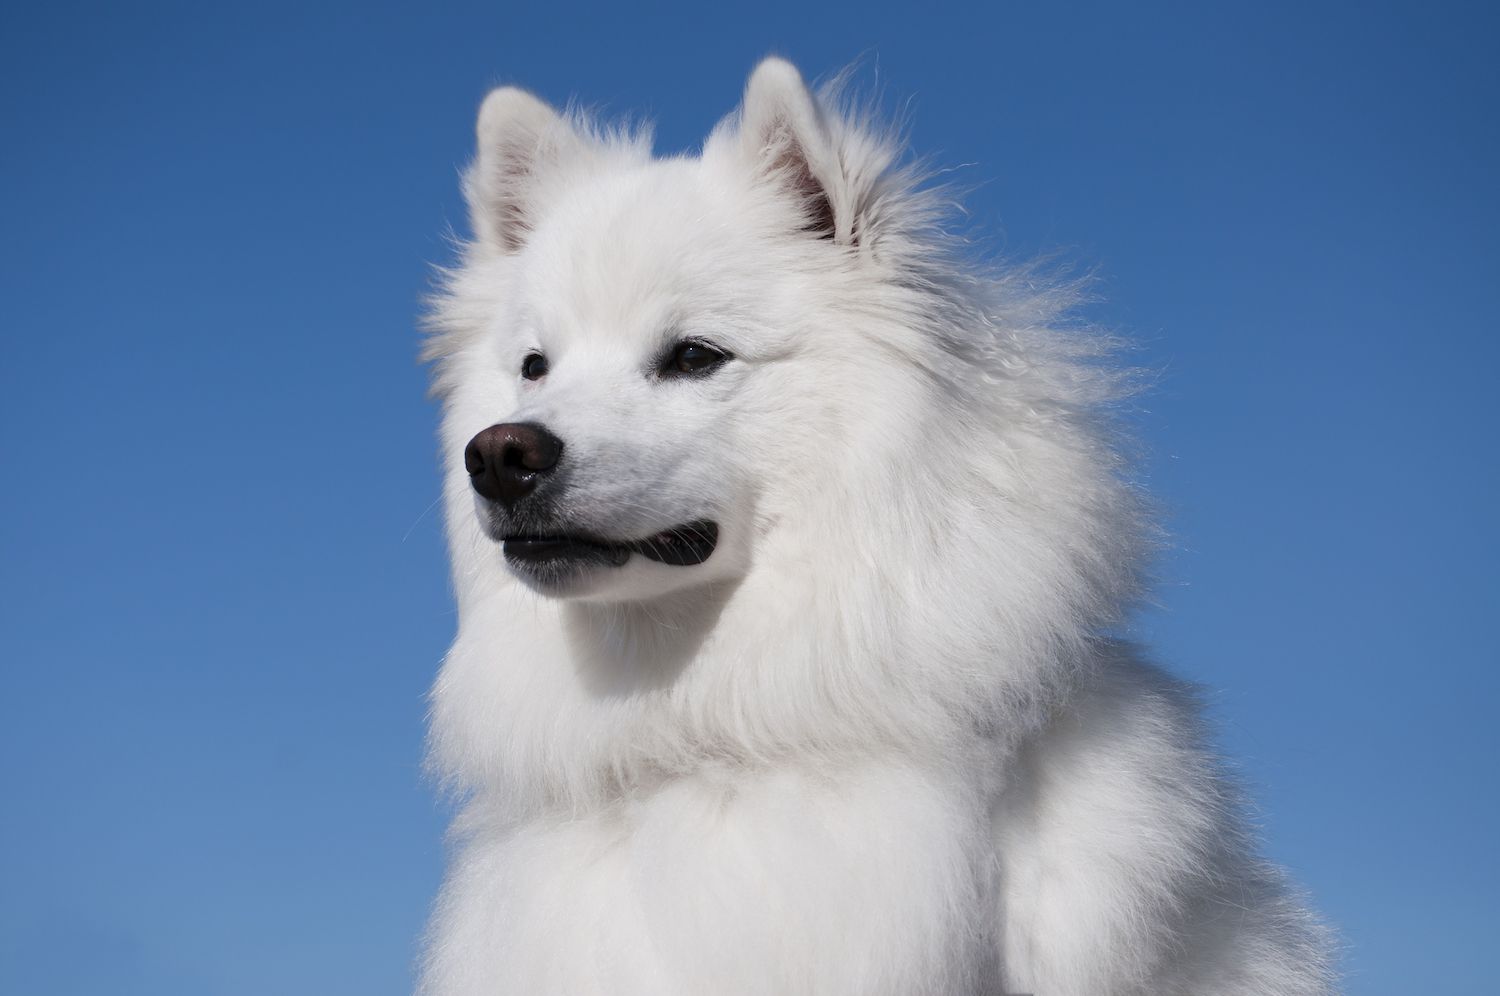 american eskimo dog against blue sky